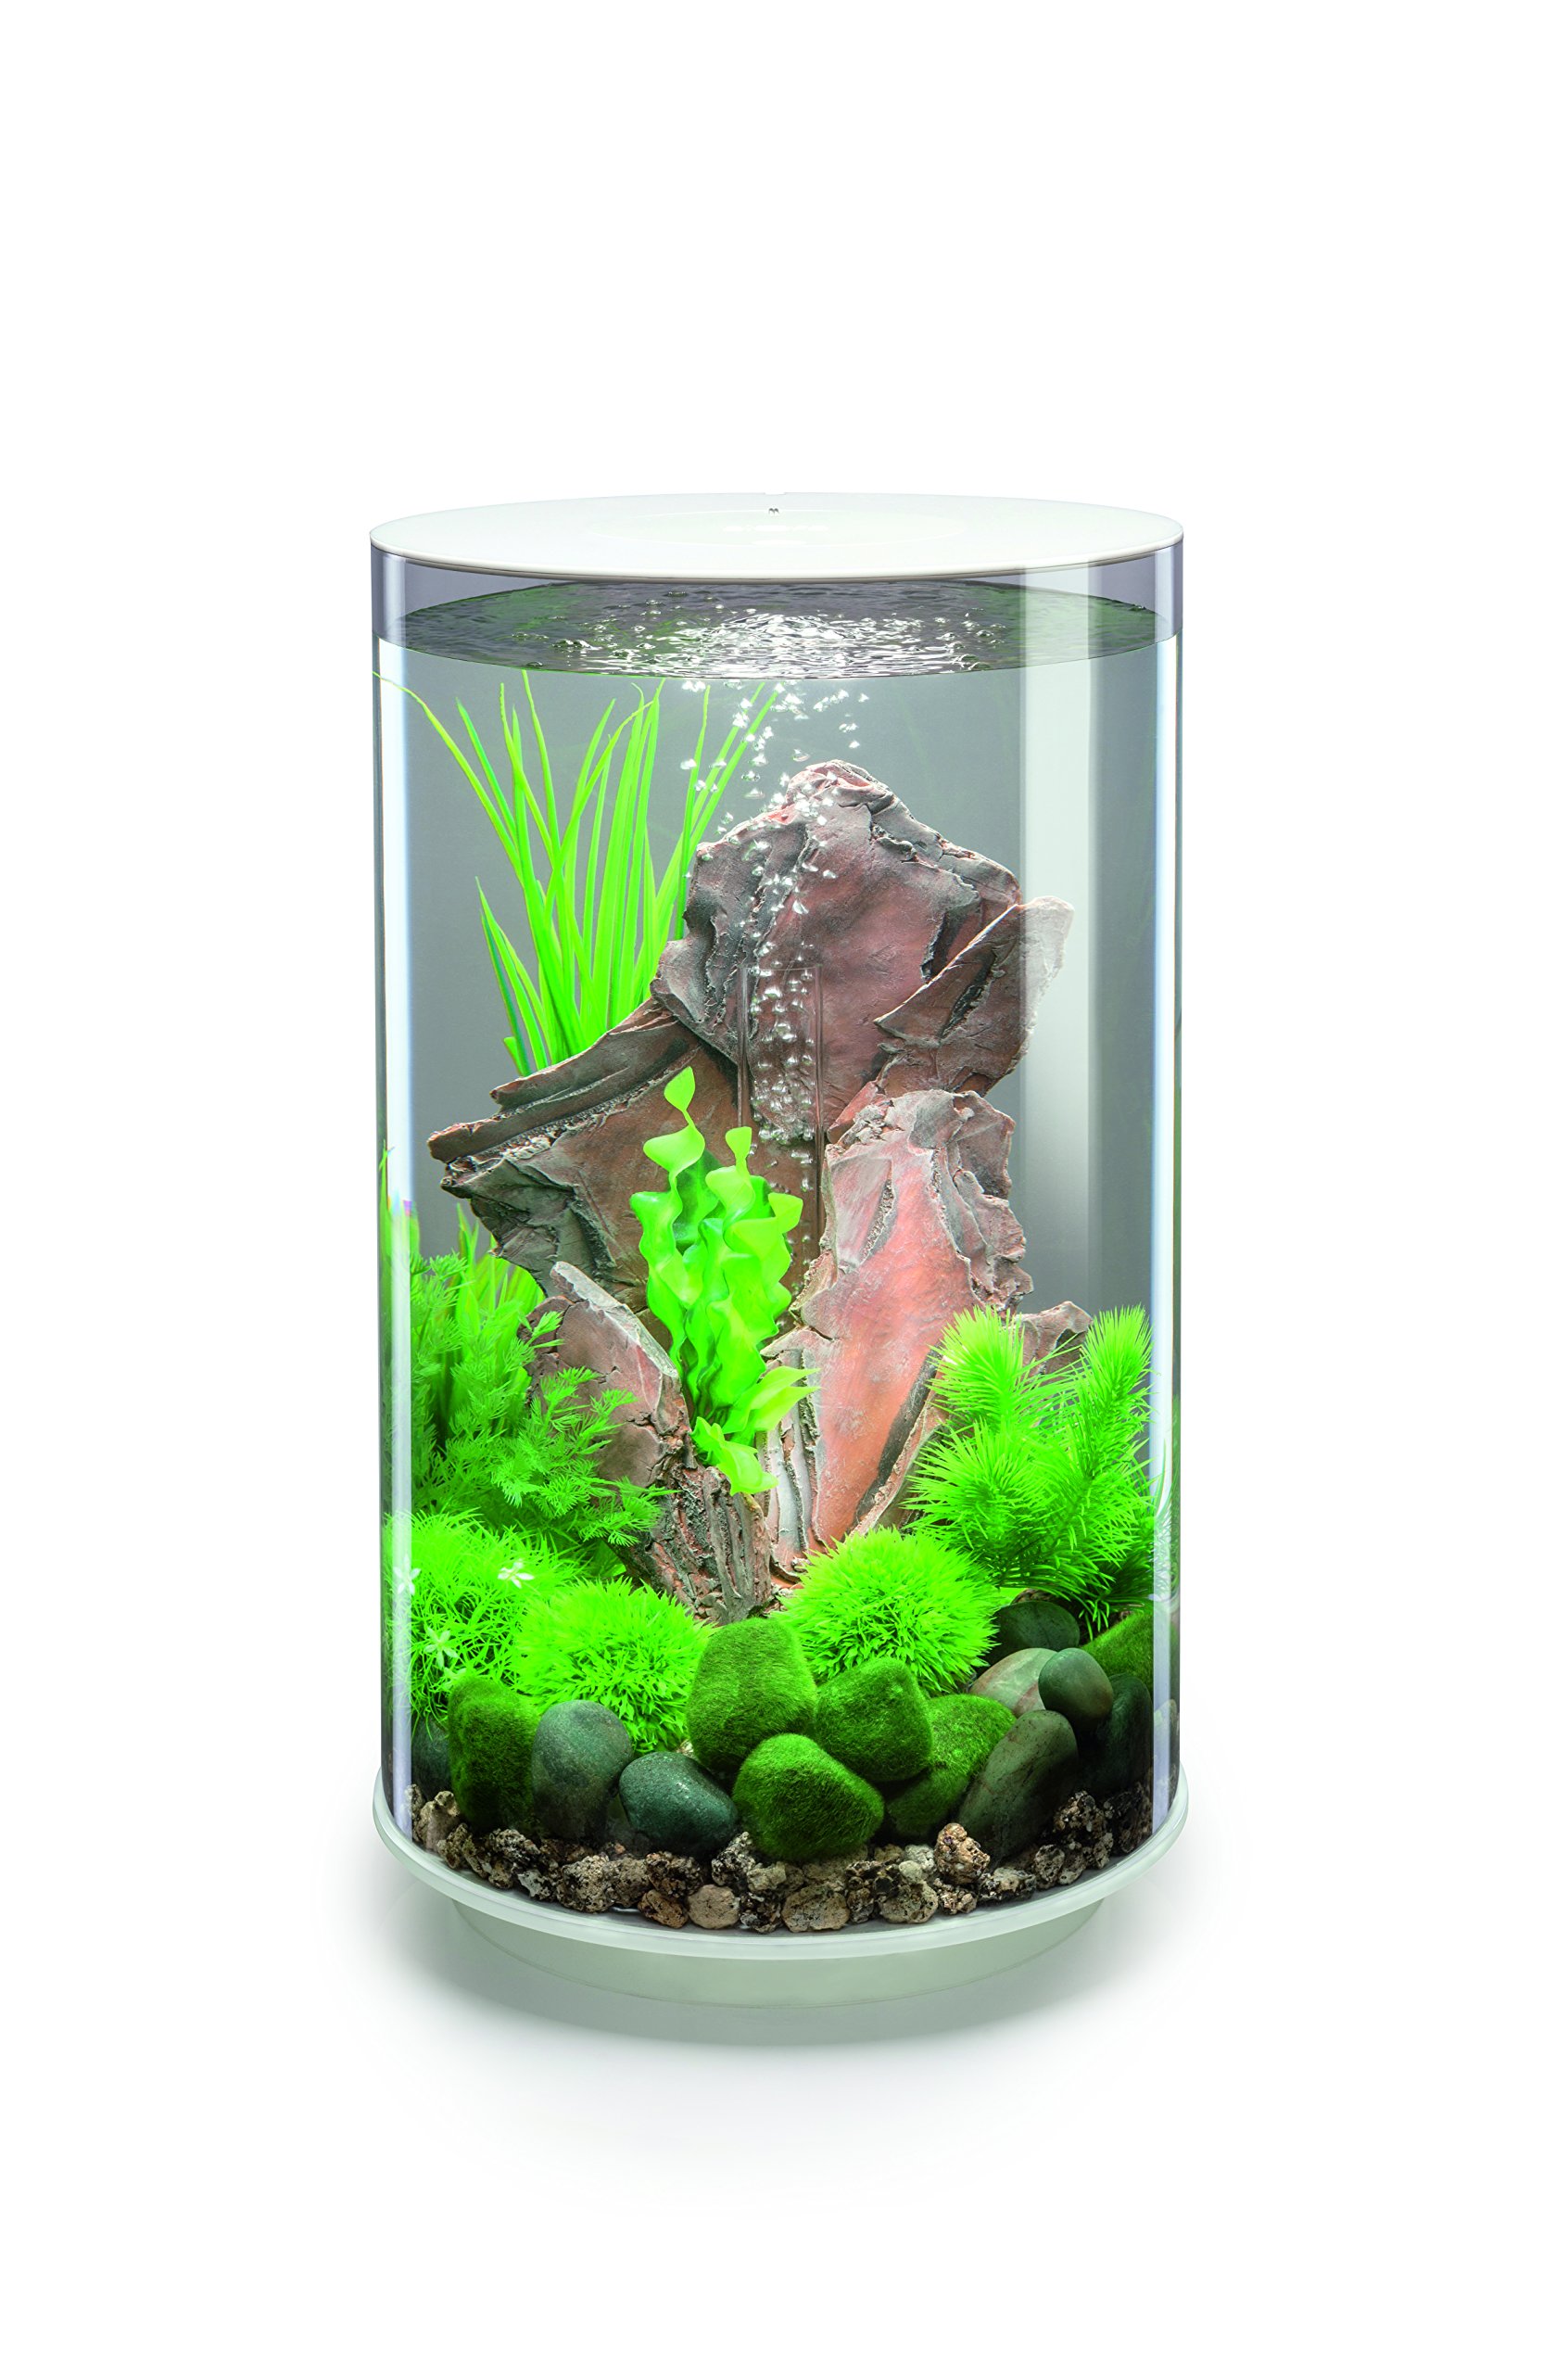 biOrb TUBE 30 LED Aquarium, 30 Liter - Aquarien Komplett-Set mit LED Beleuchtung und patentiertem Filter-System, Acryl-Becken